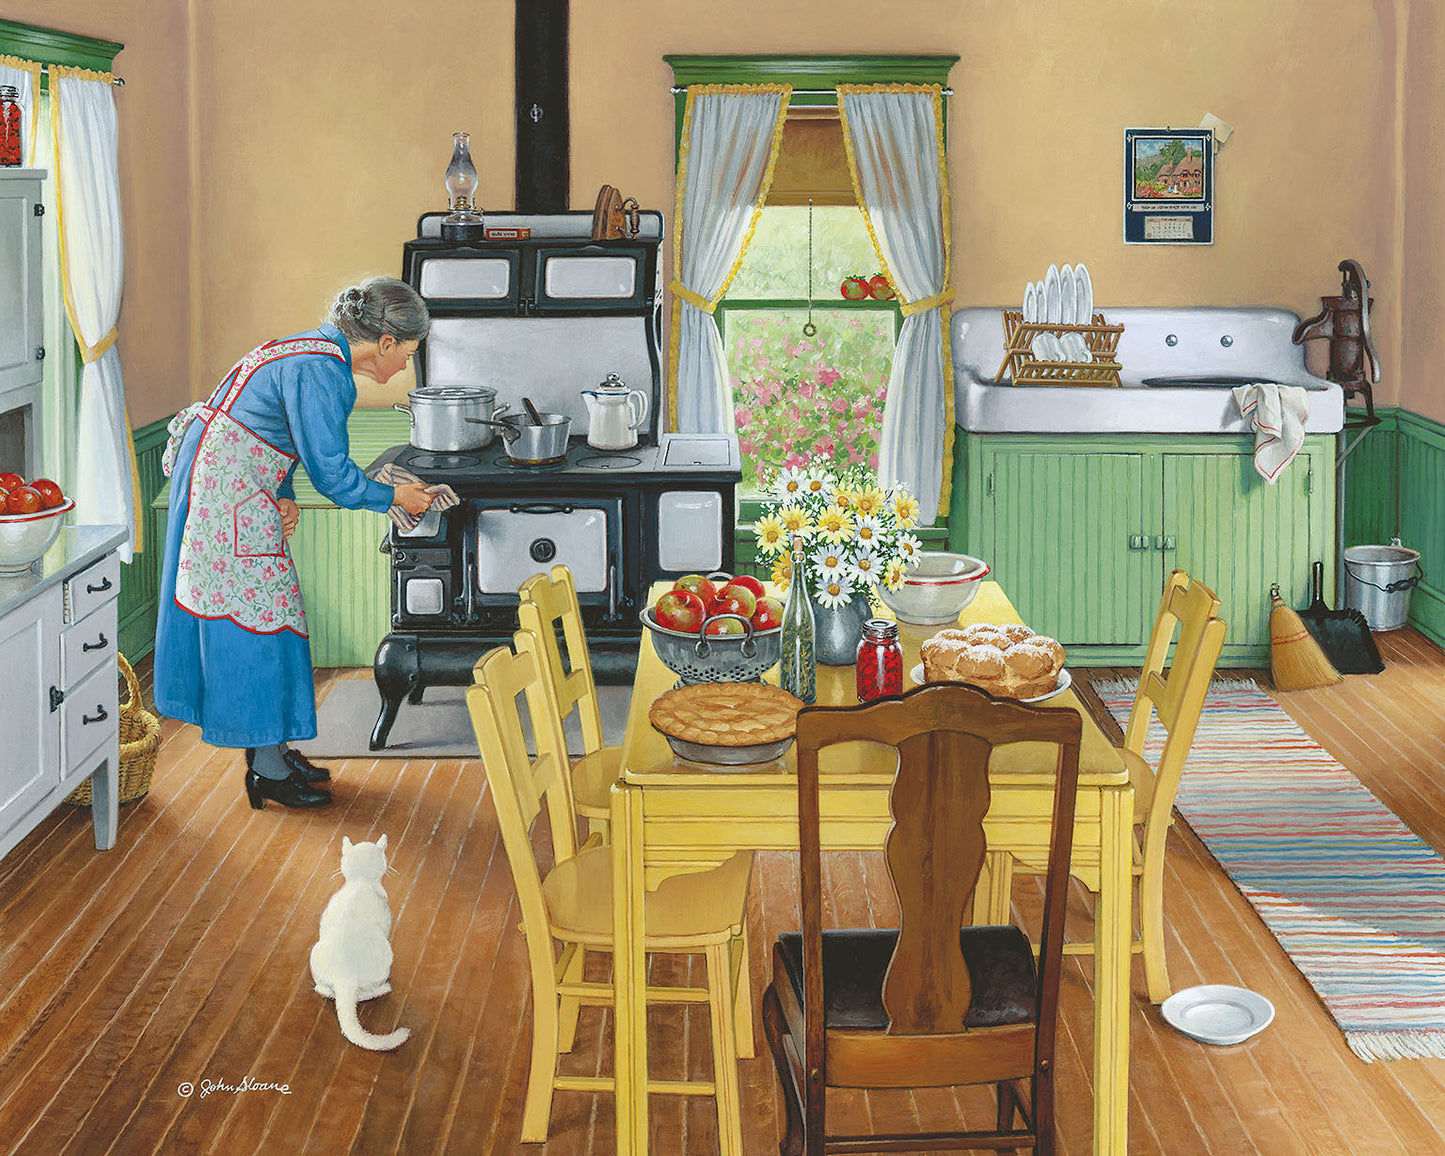 Grandma's Kitchen - Puzzle by John Sloane